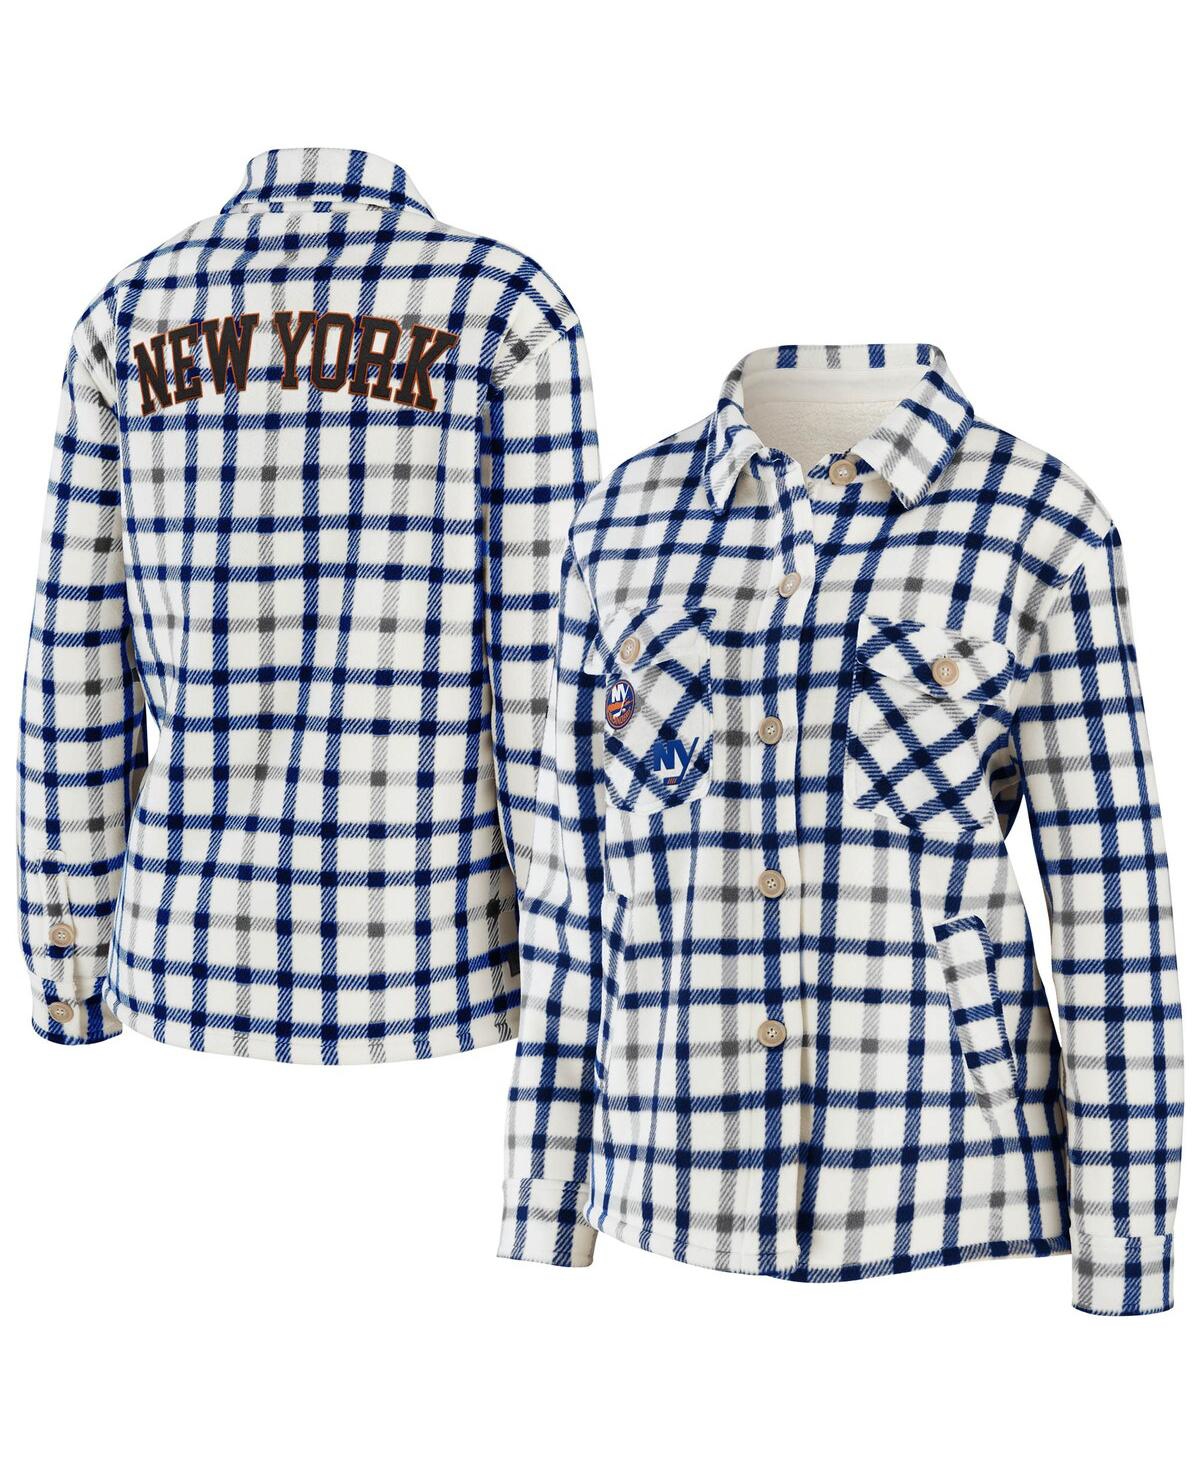 Women's Wear by Erin Andrews Oatmeal New York Islanders Plaid Button-Up Shirt Jacket - Oatmeal